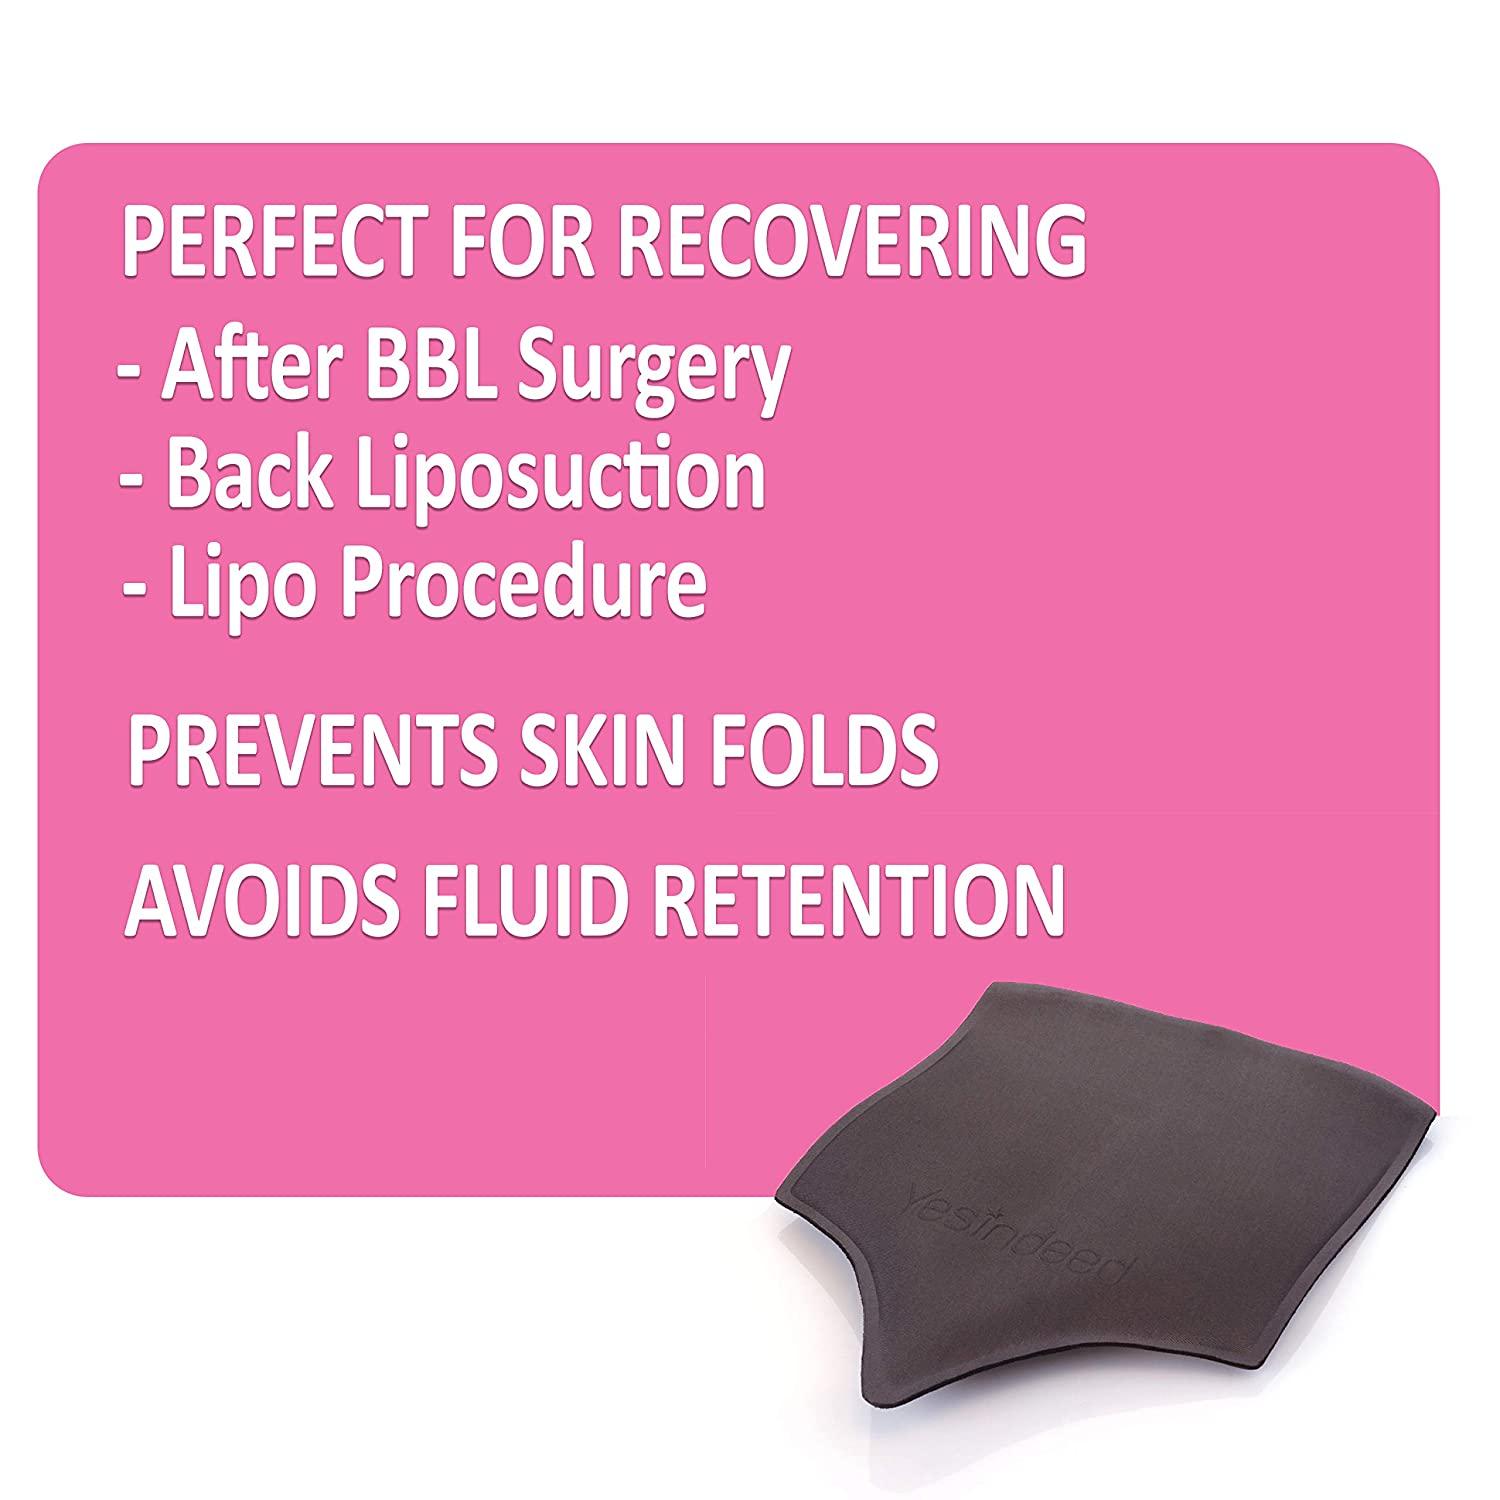 Lipo Lumbar Molder Foam Board Provides Abdominal Compression, Support, &  Comfort Post Liposuction or BBL Surgery – Soft Faja Board Minimizes  Swelling